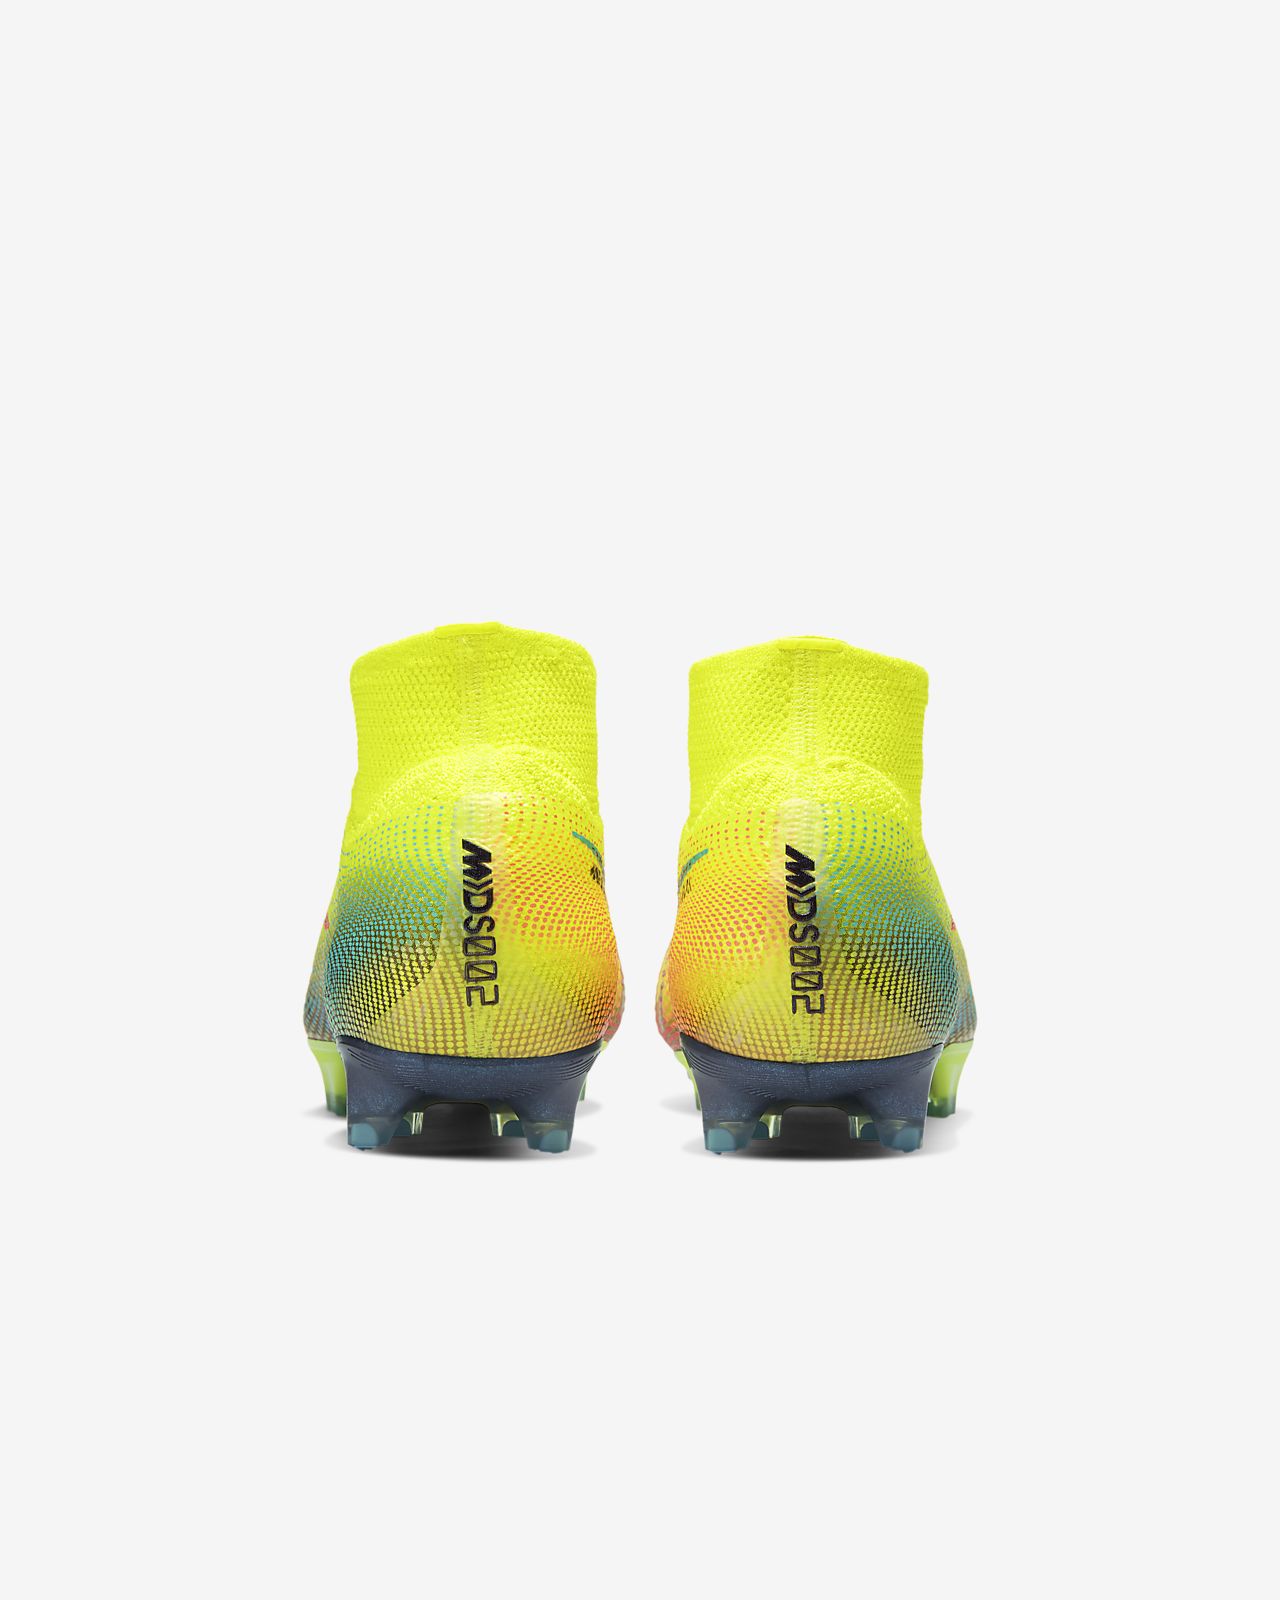 Football shoes Nike Mercurial Superfly 6 Elite SG Pro AC M.